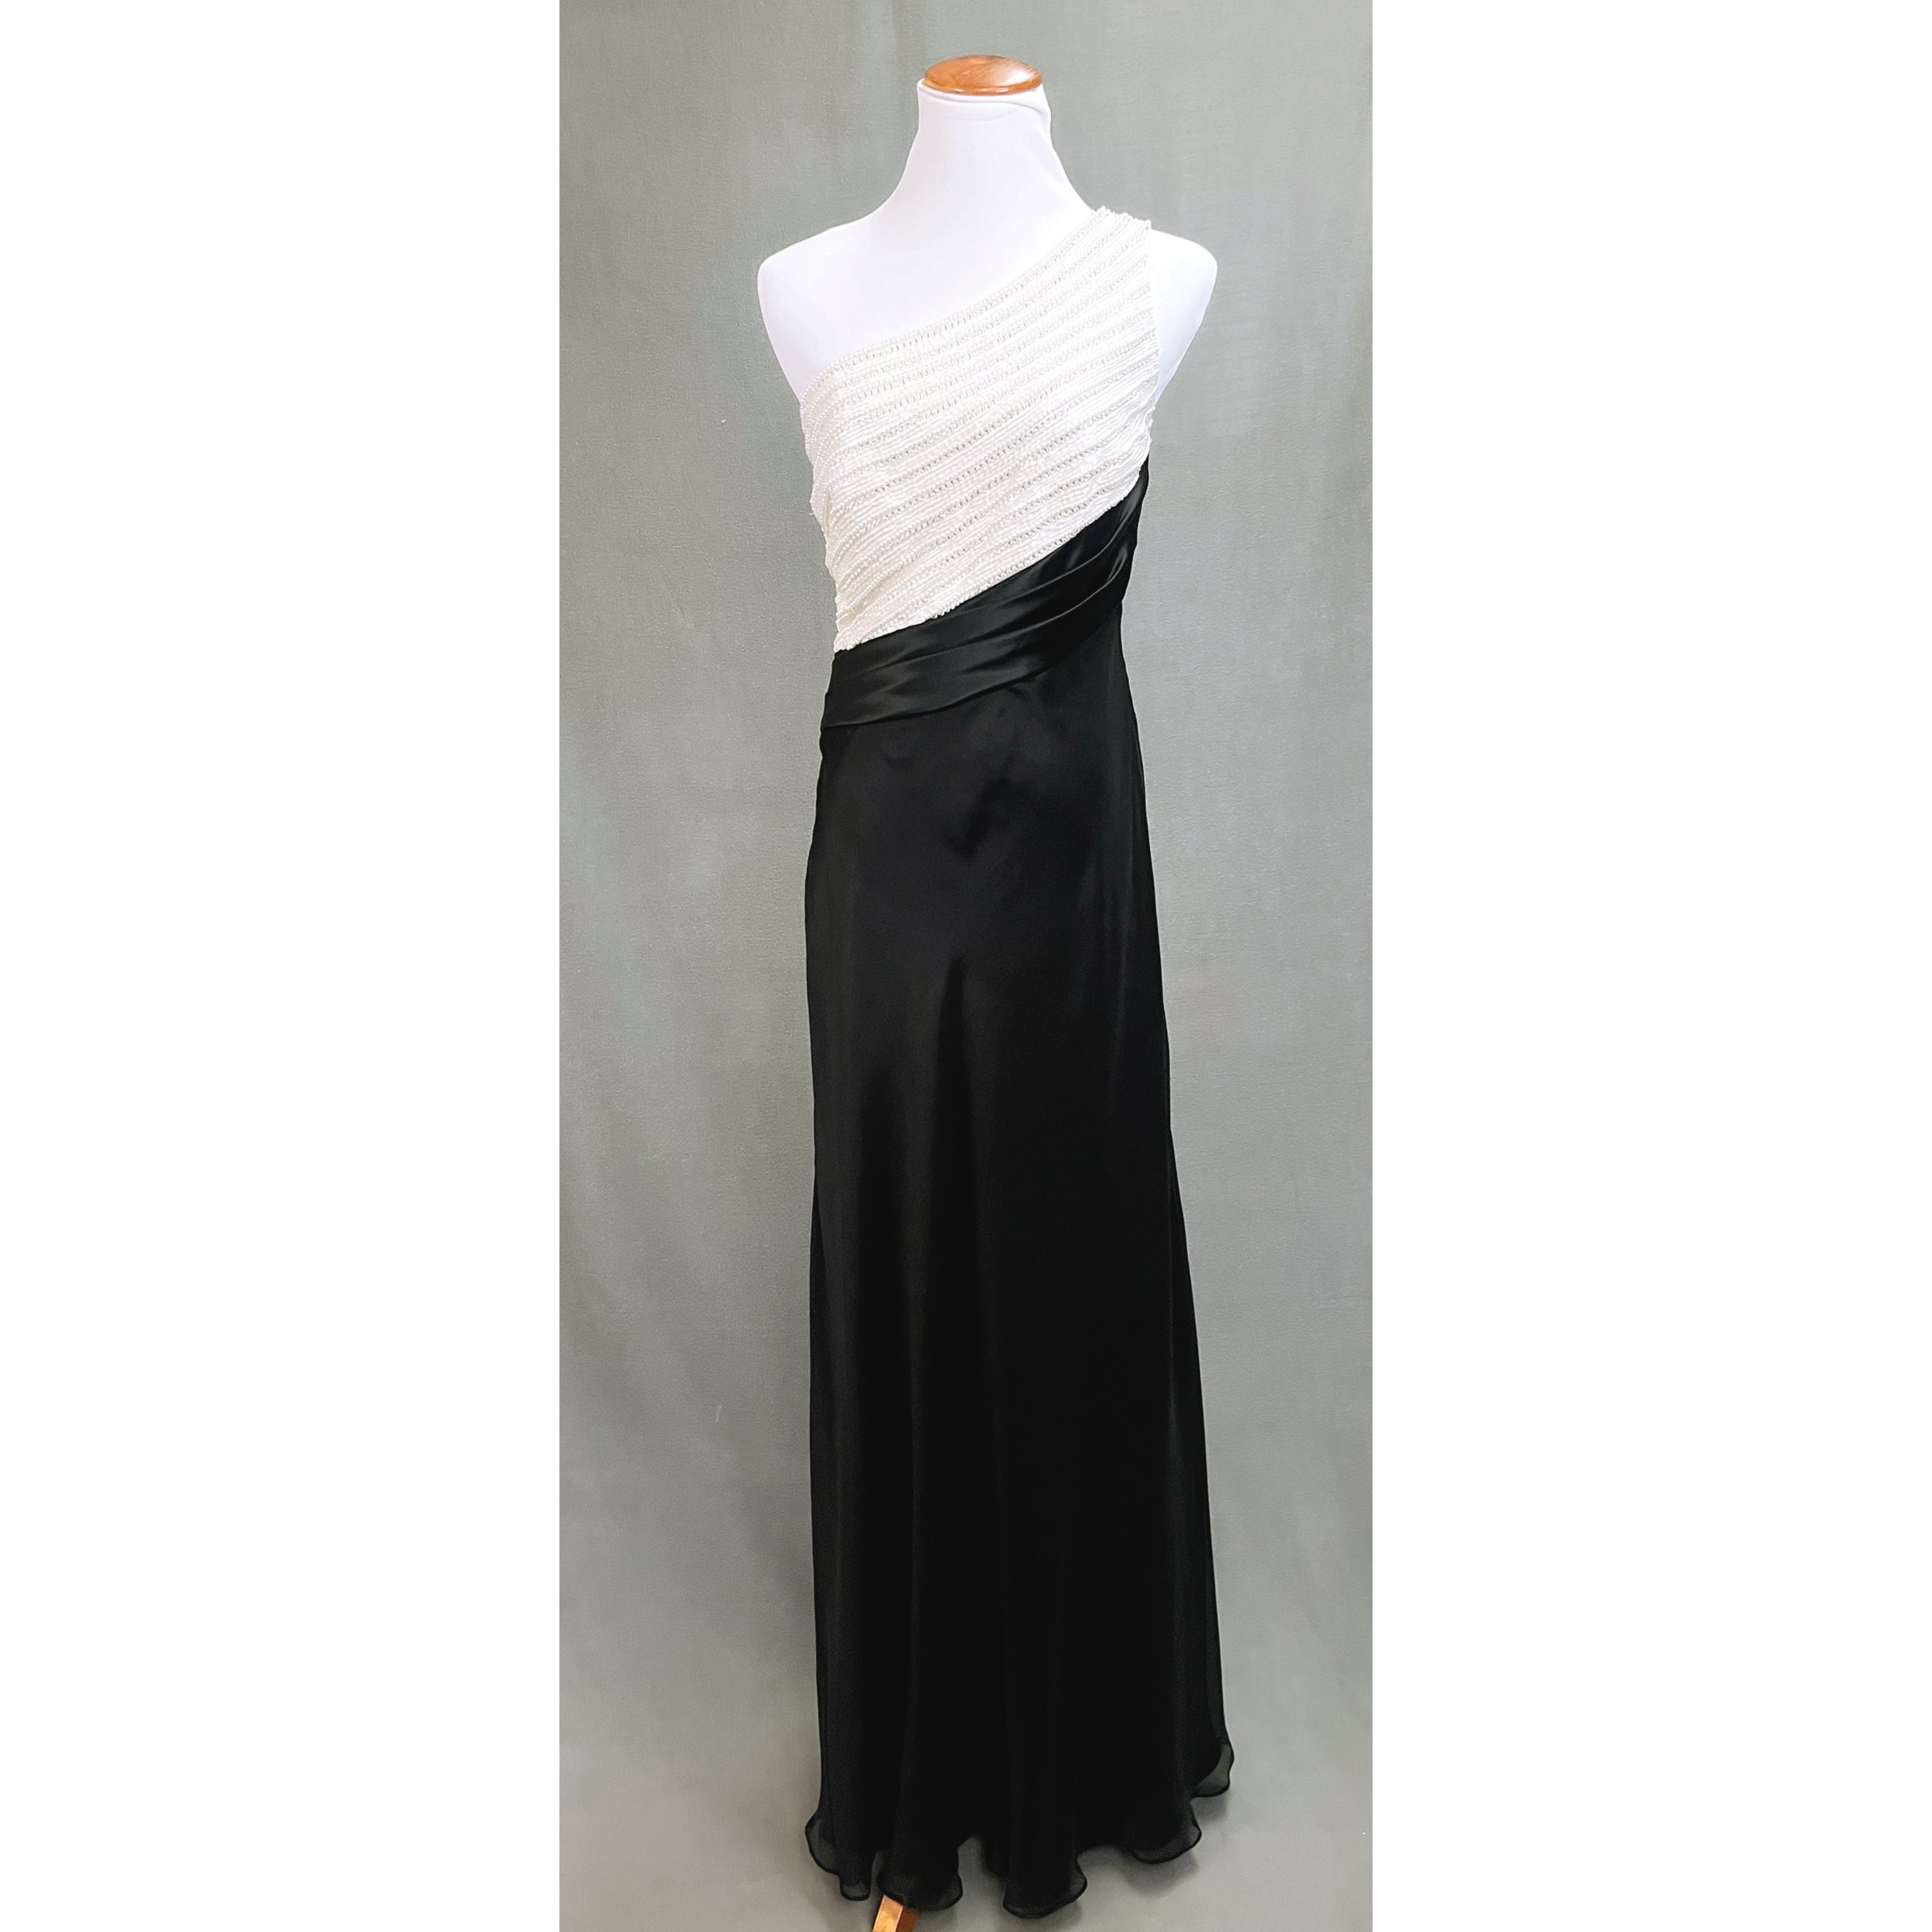 Carmen Marc Valvo pearl and black dress, size 4